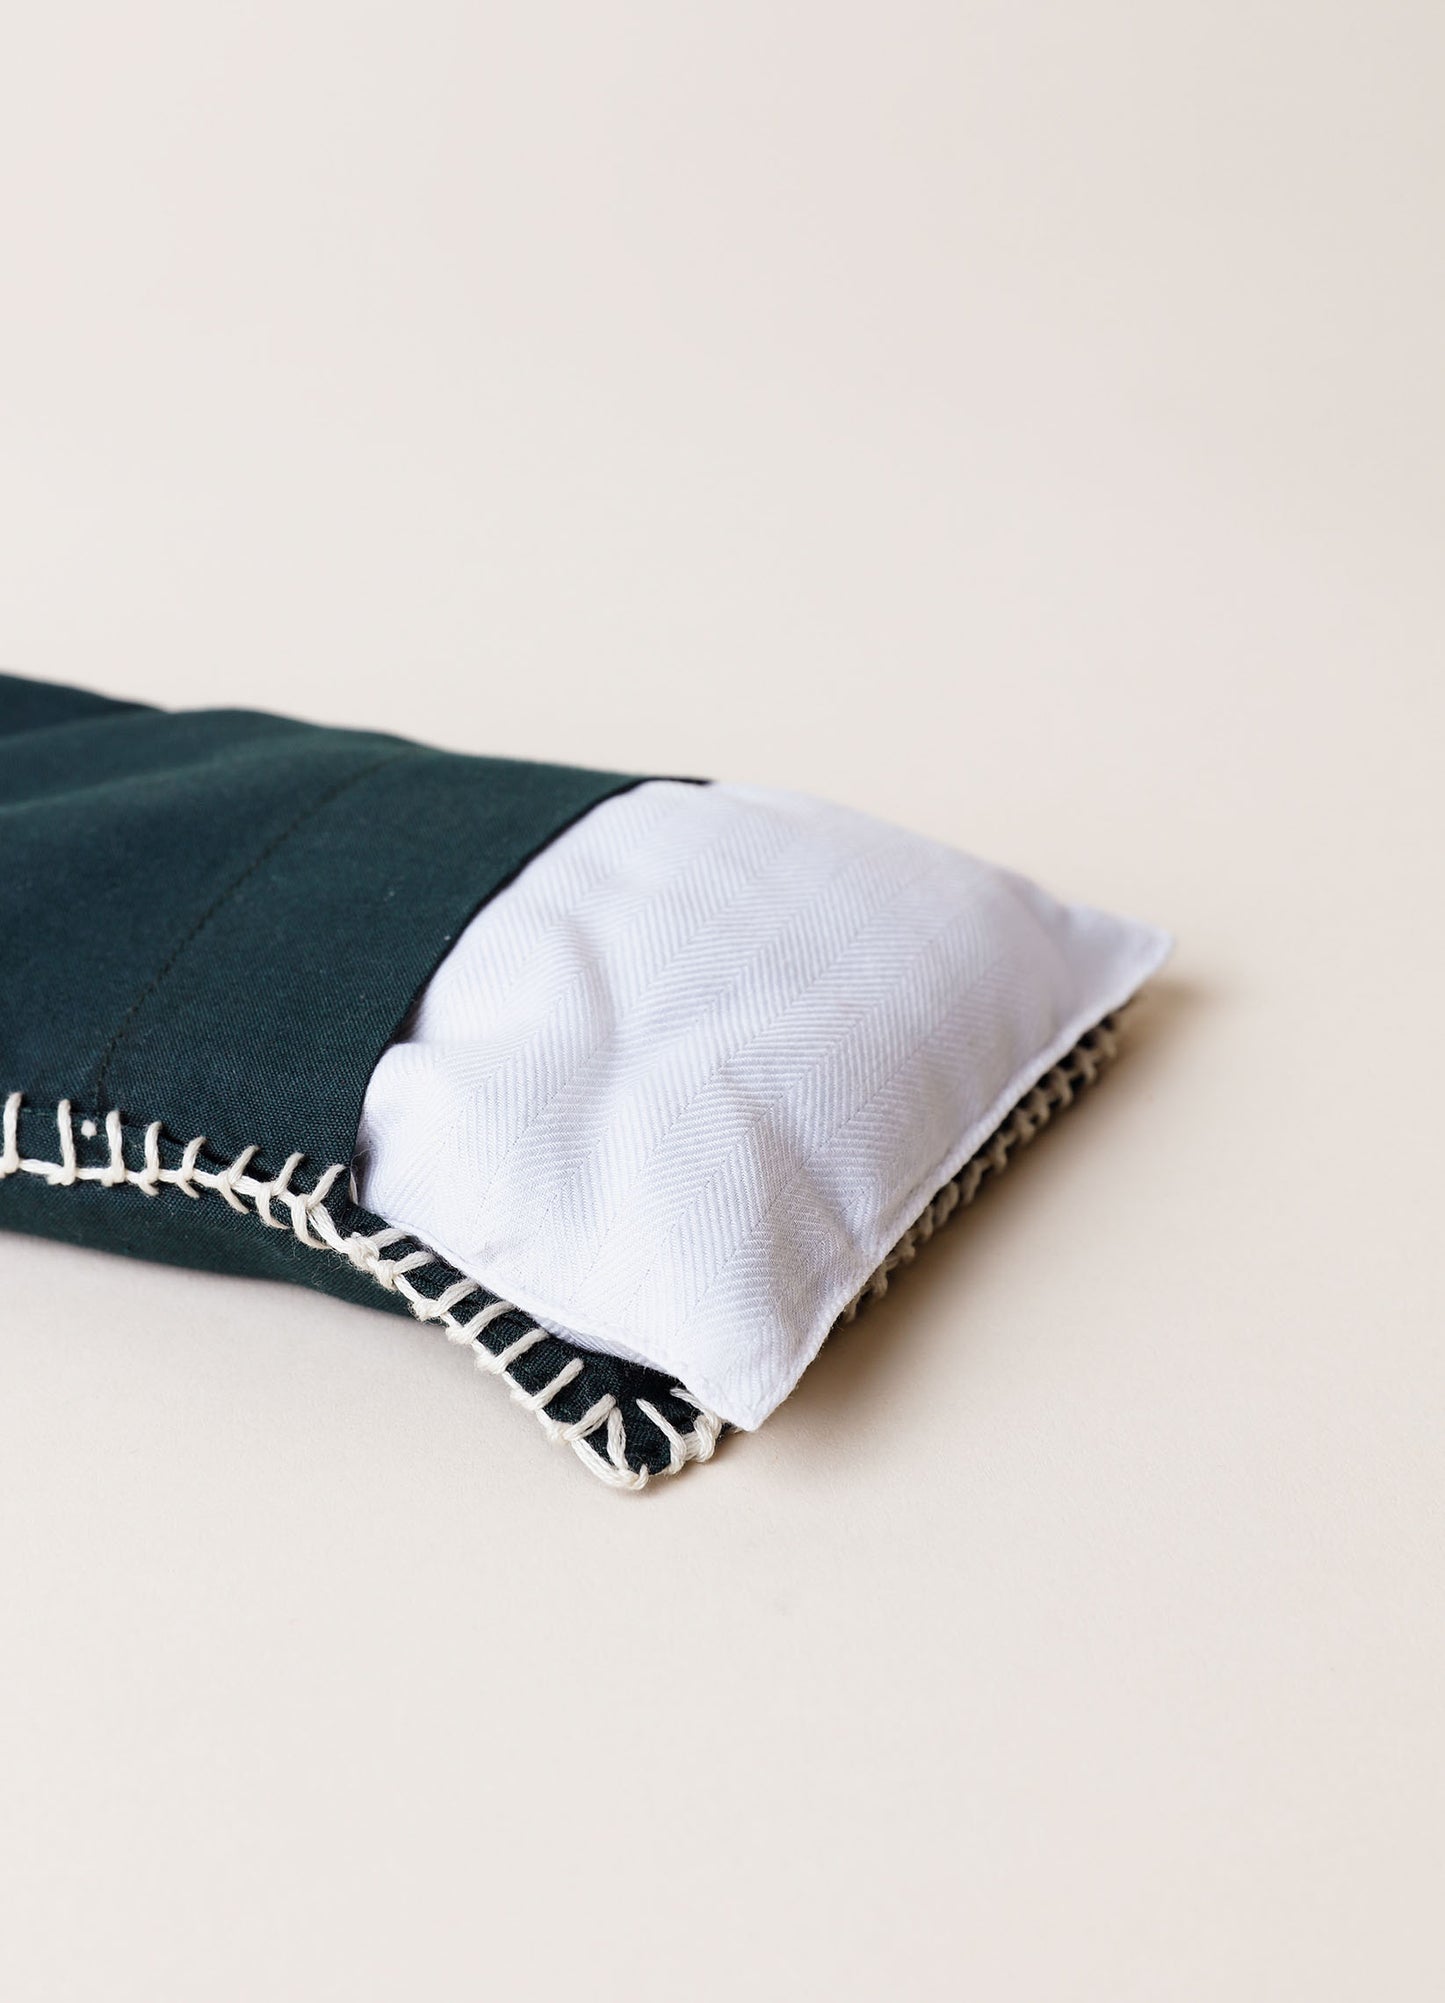 eye pillow - RAHA - emerald